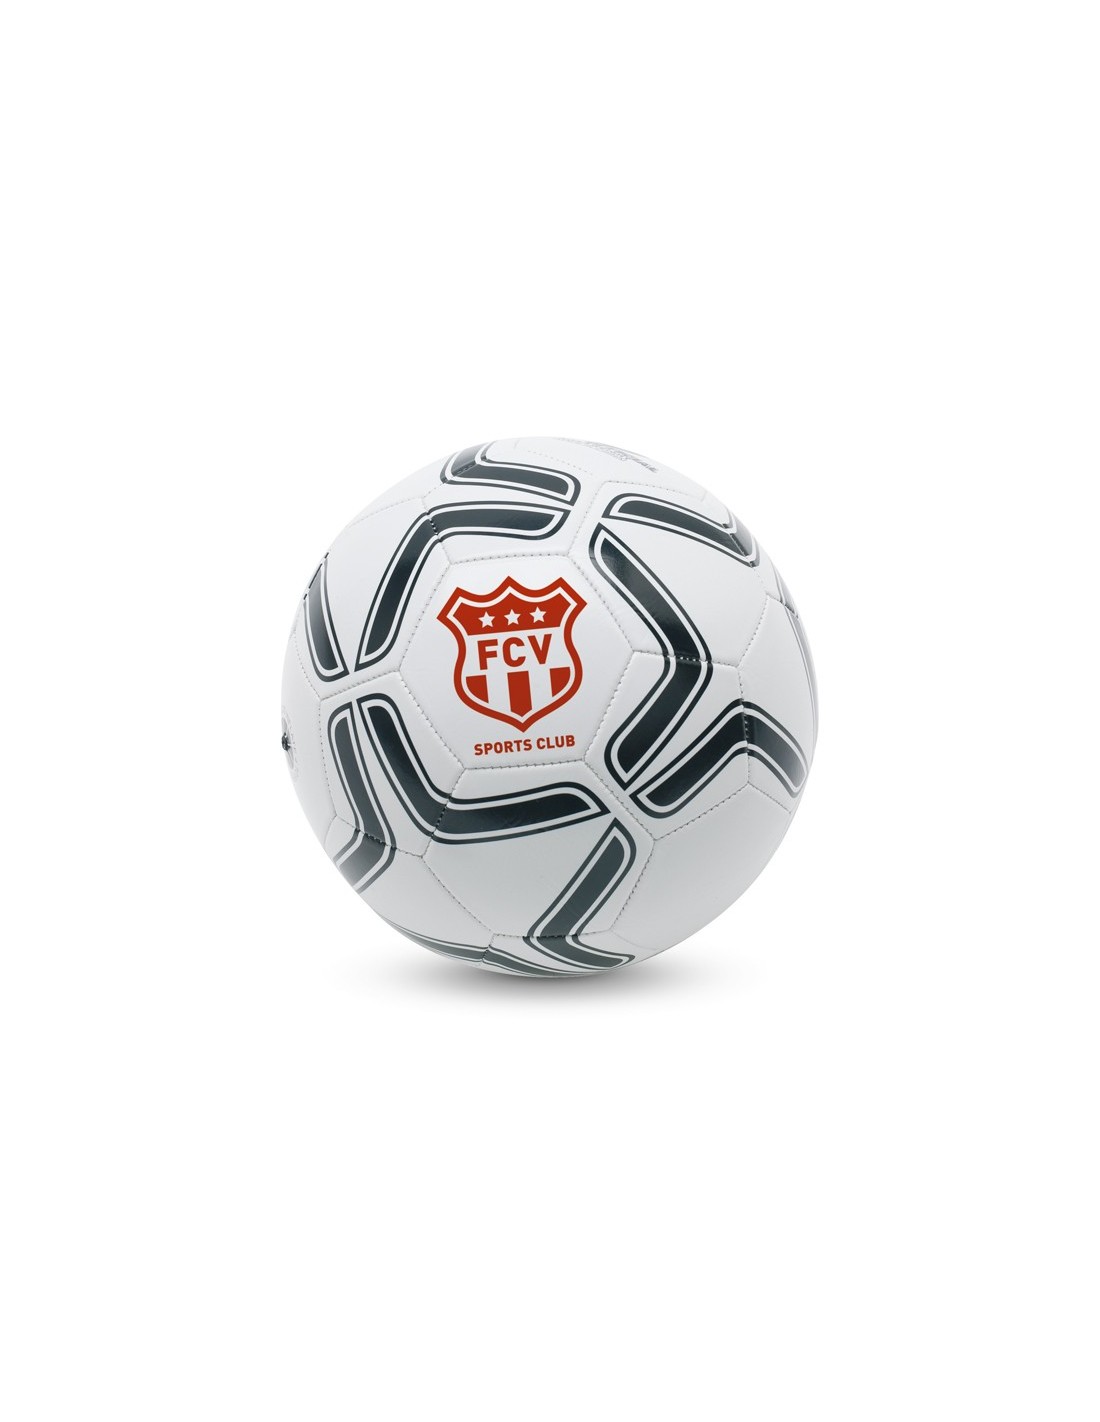 BALLONS DE FOOTBALL publicitaires personnalisable avec logo